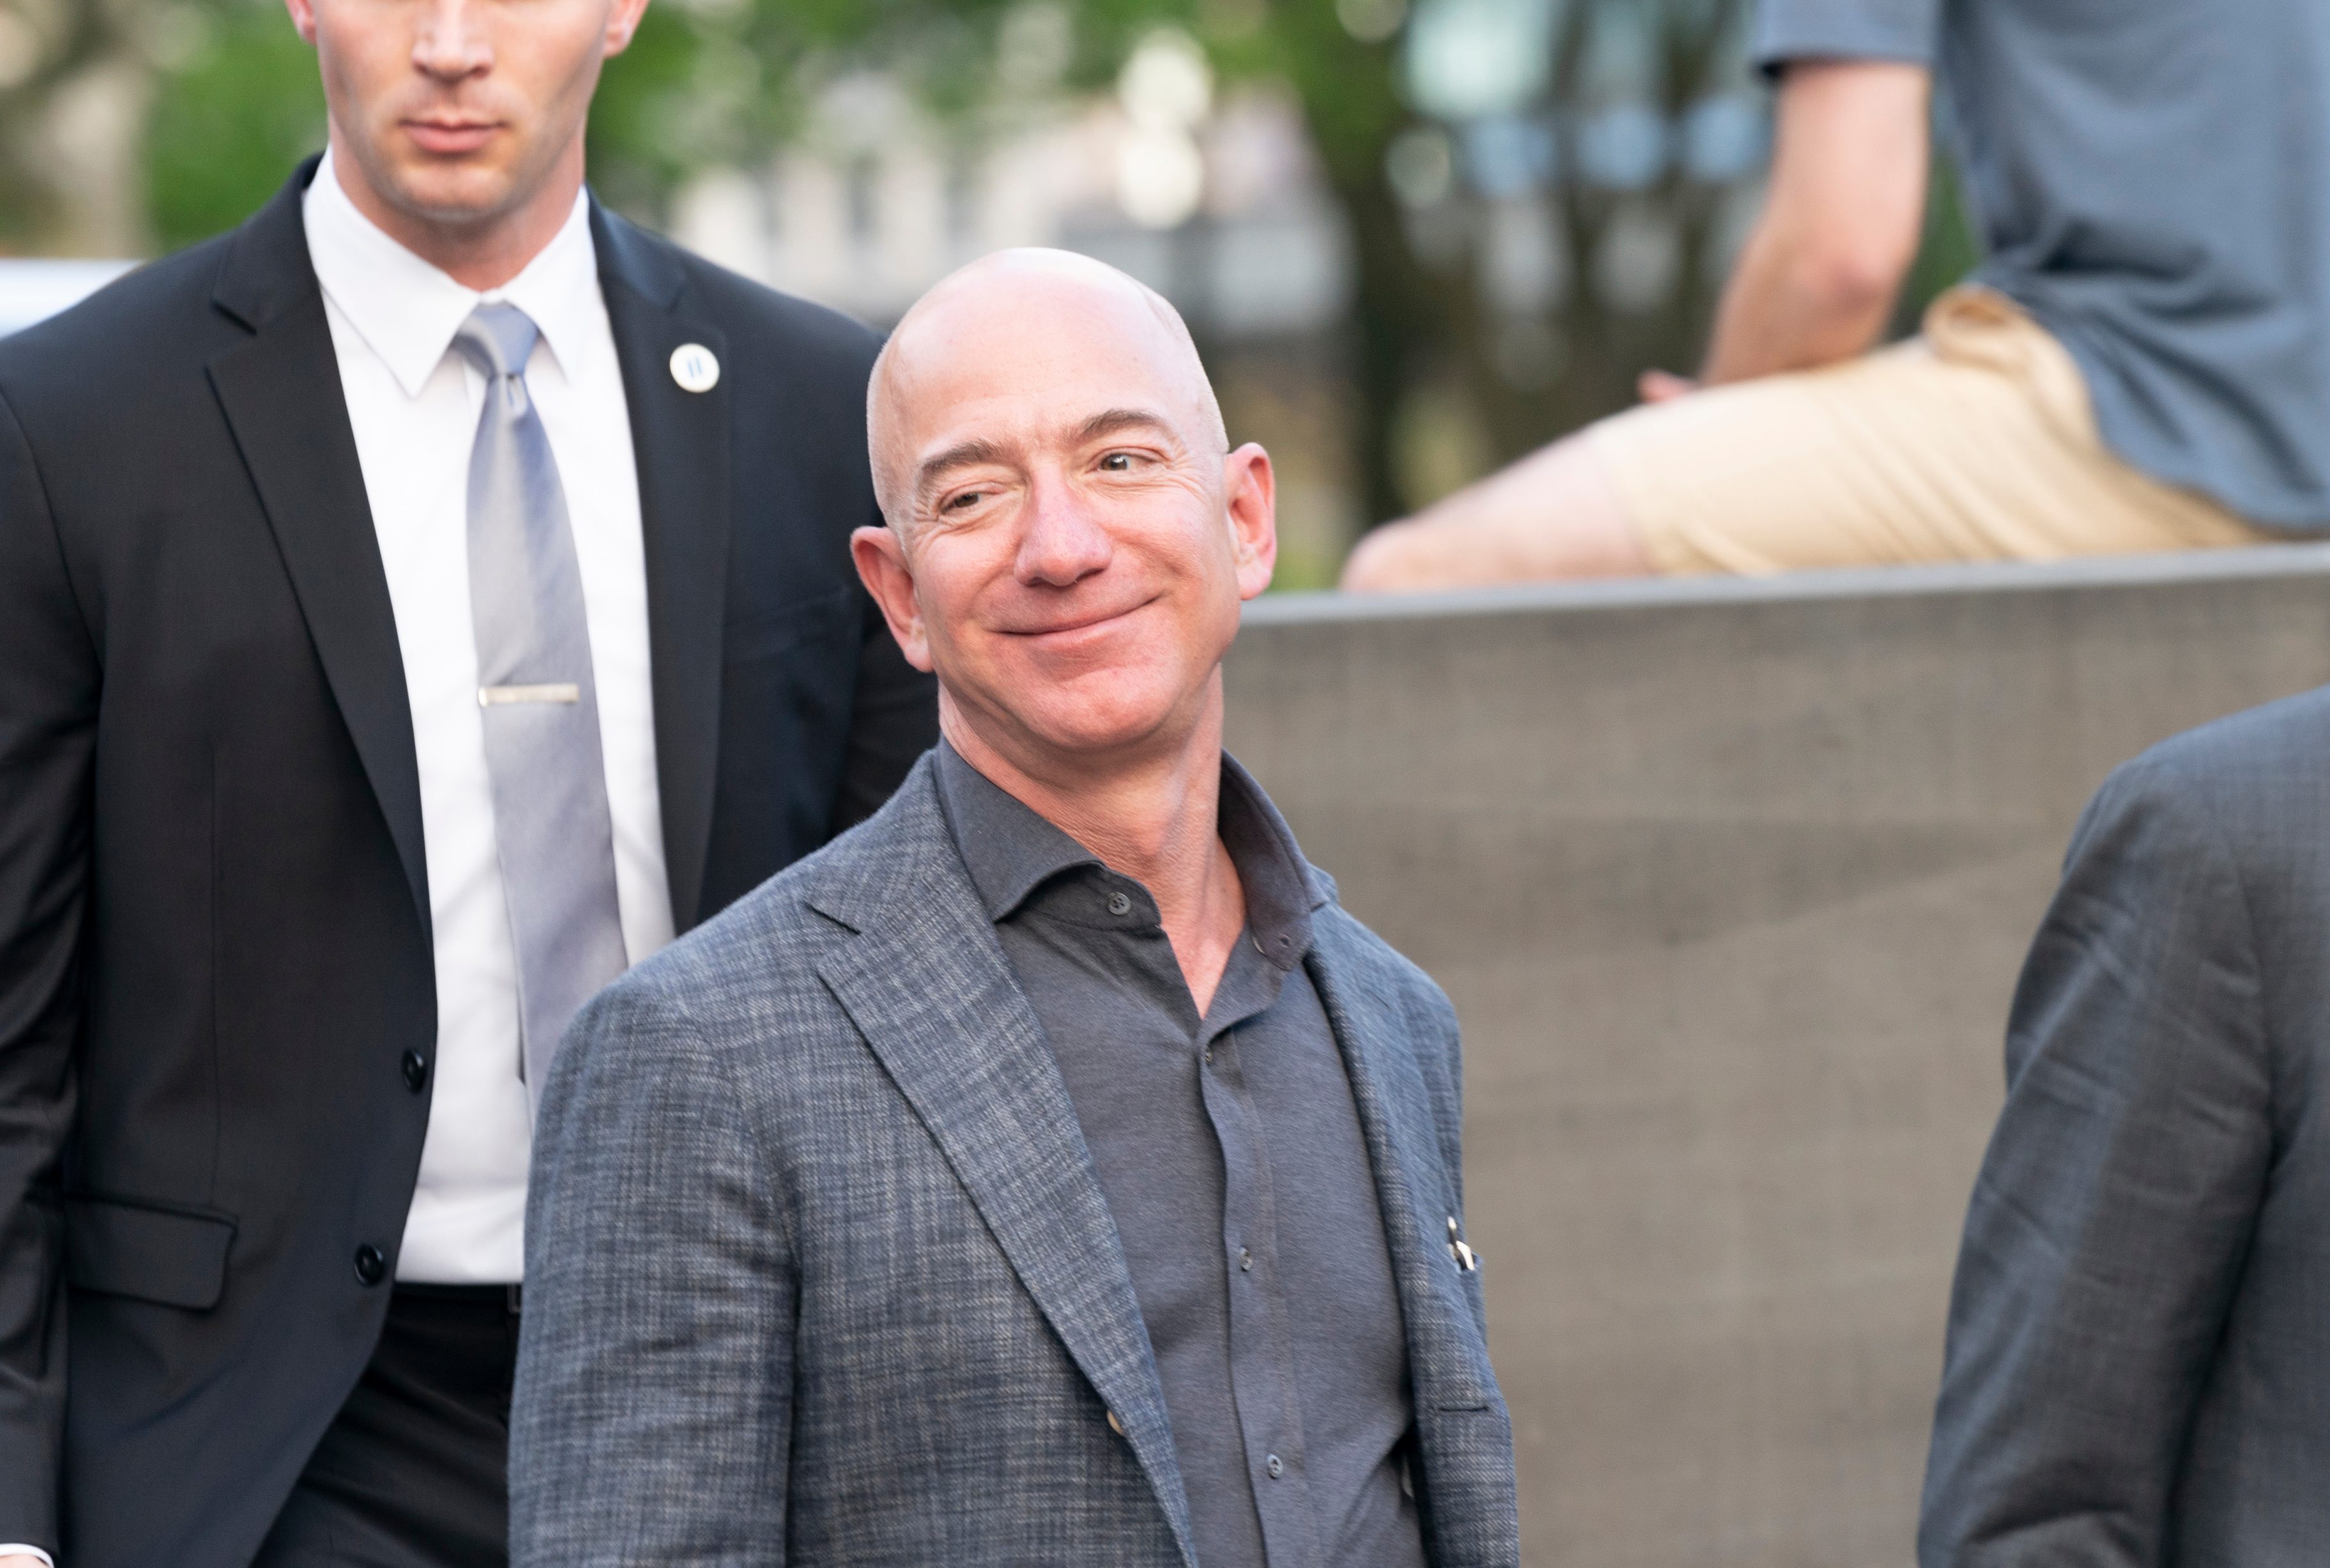 Who is Jeff Bezos